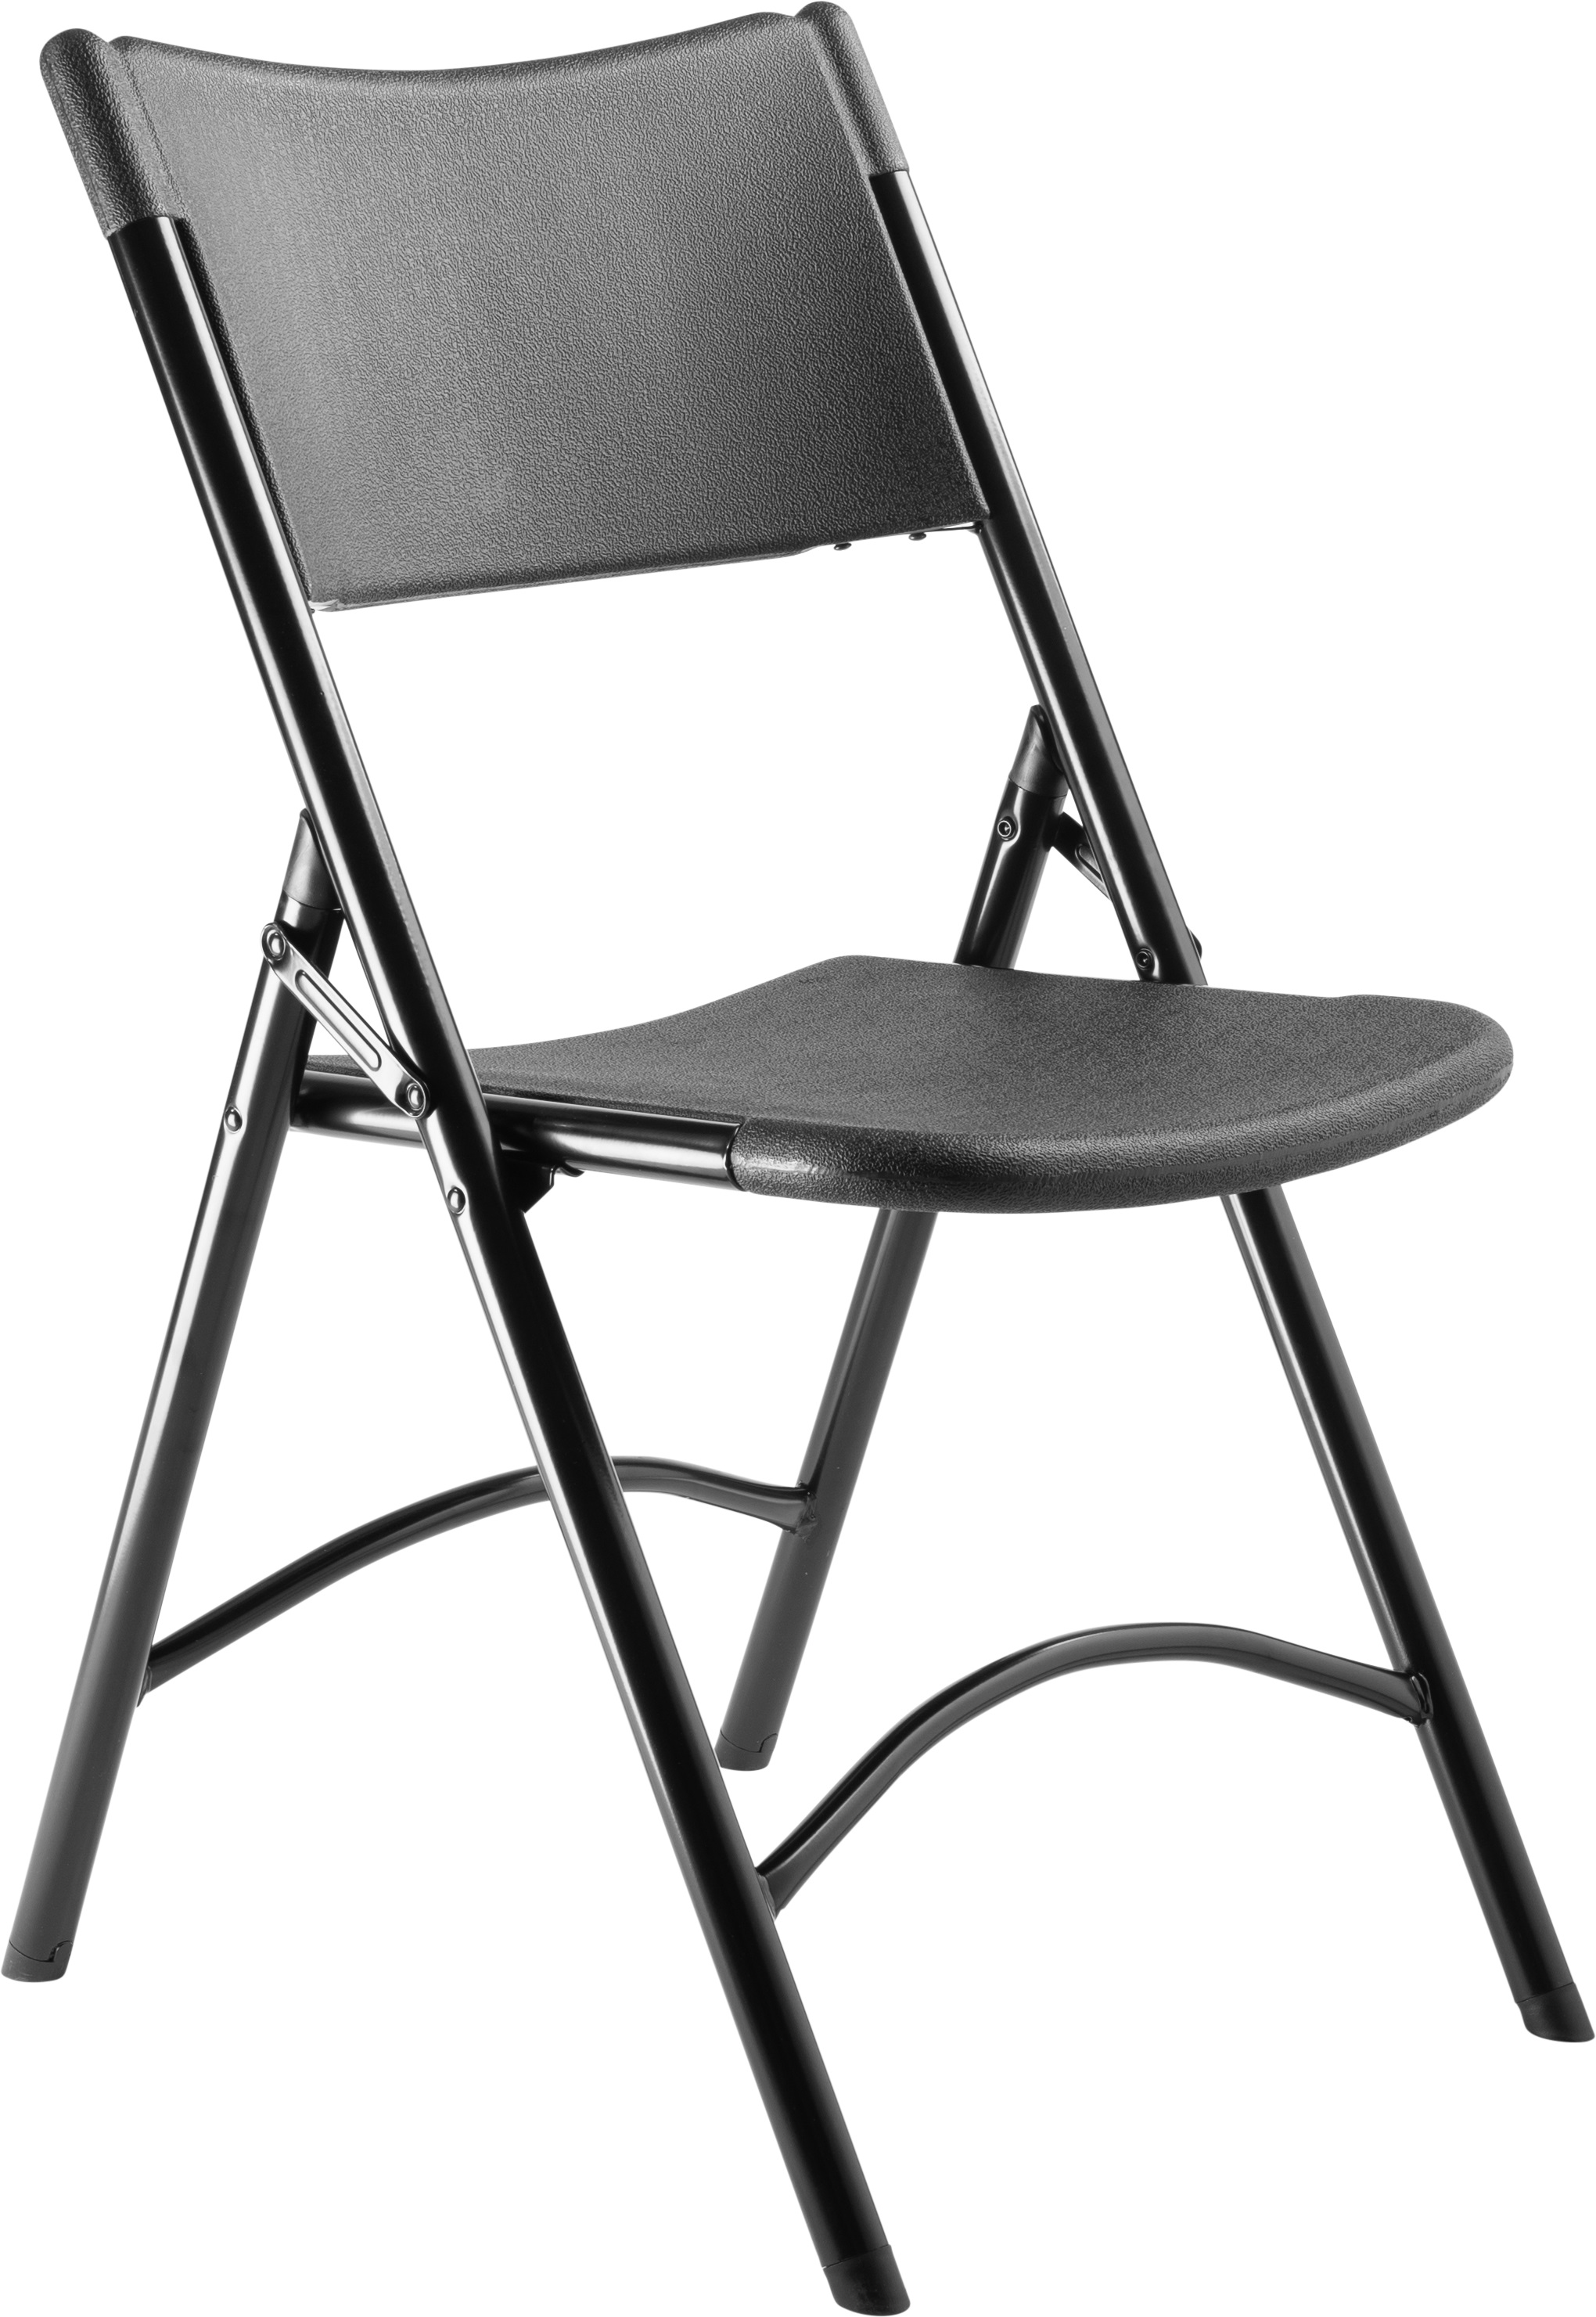 NPS 610 Blow Mold Folding Chair, Black